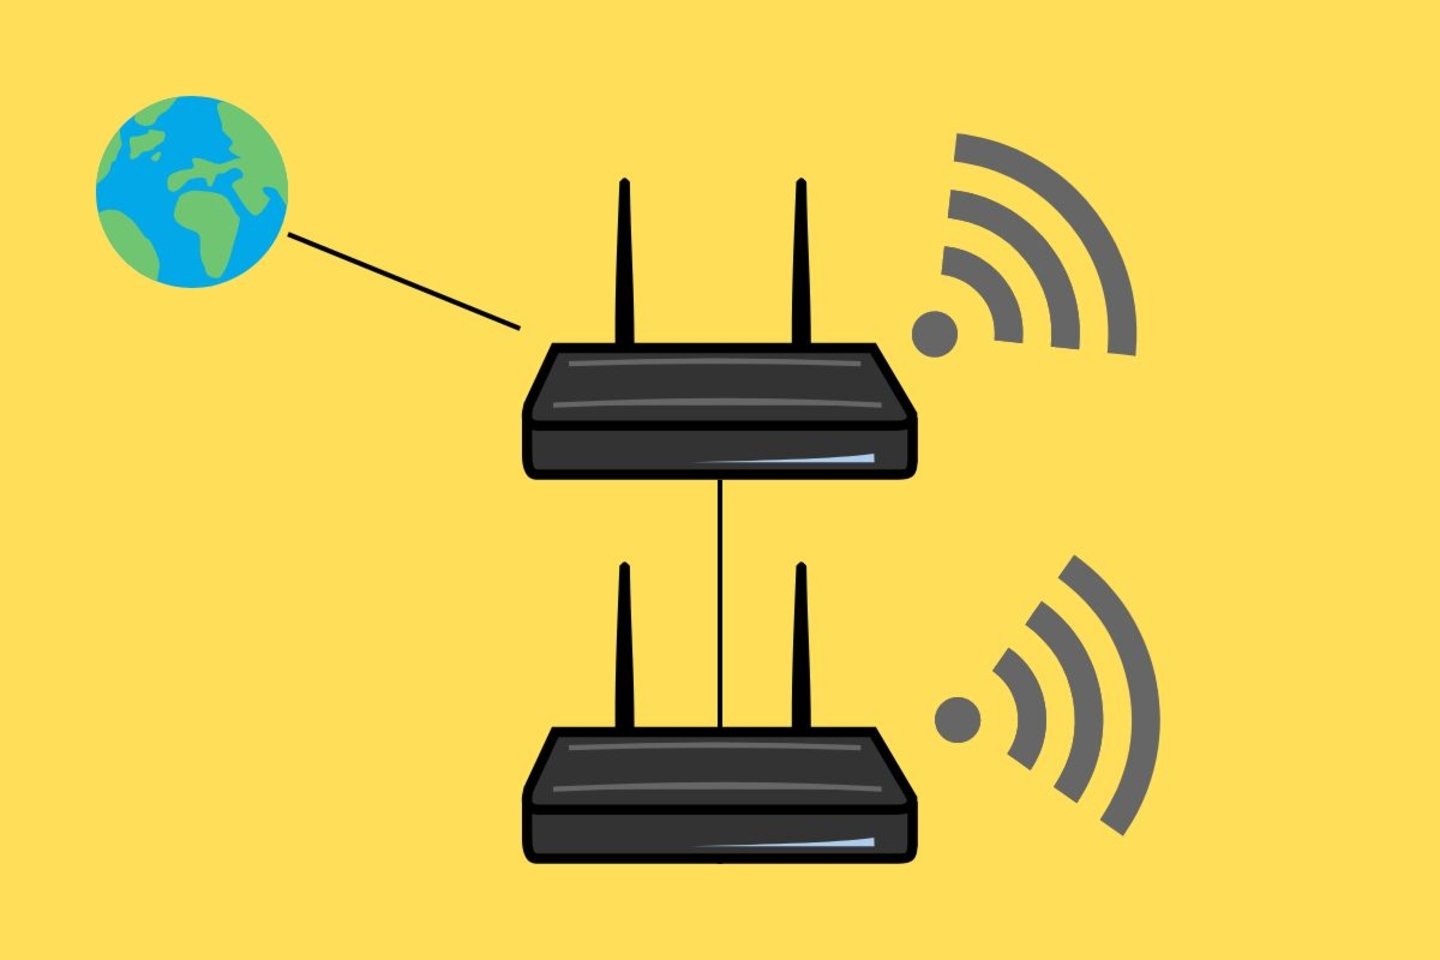 Cómo usar un router viejo como un repetidor WiFi